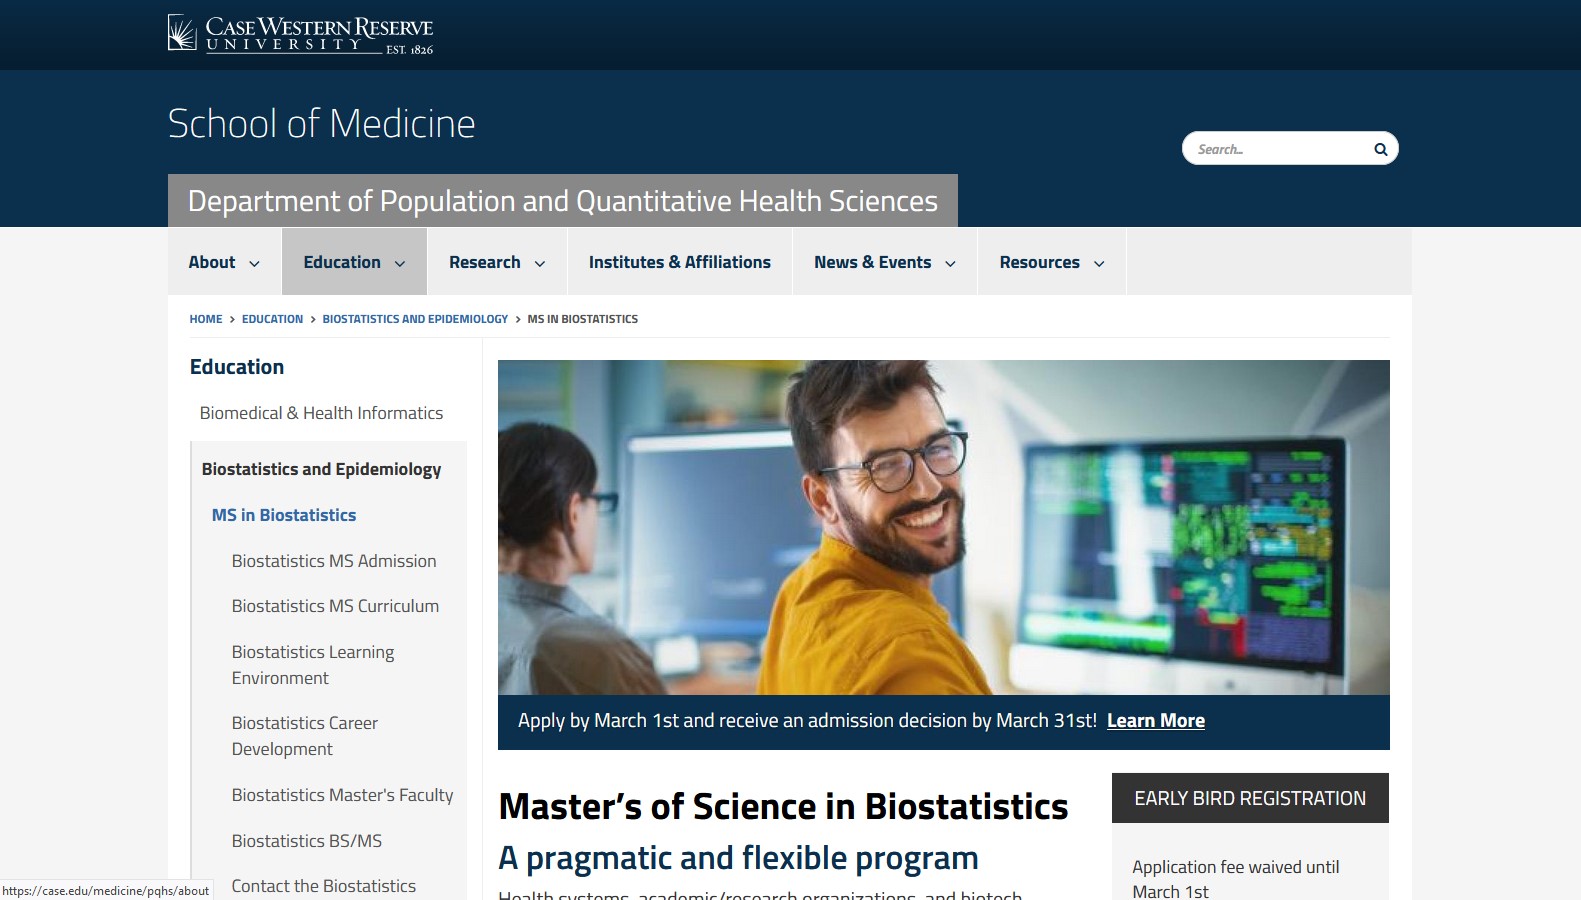 M.S. in Biostatistics at Case Western Reserve University